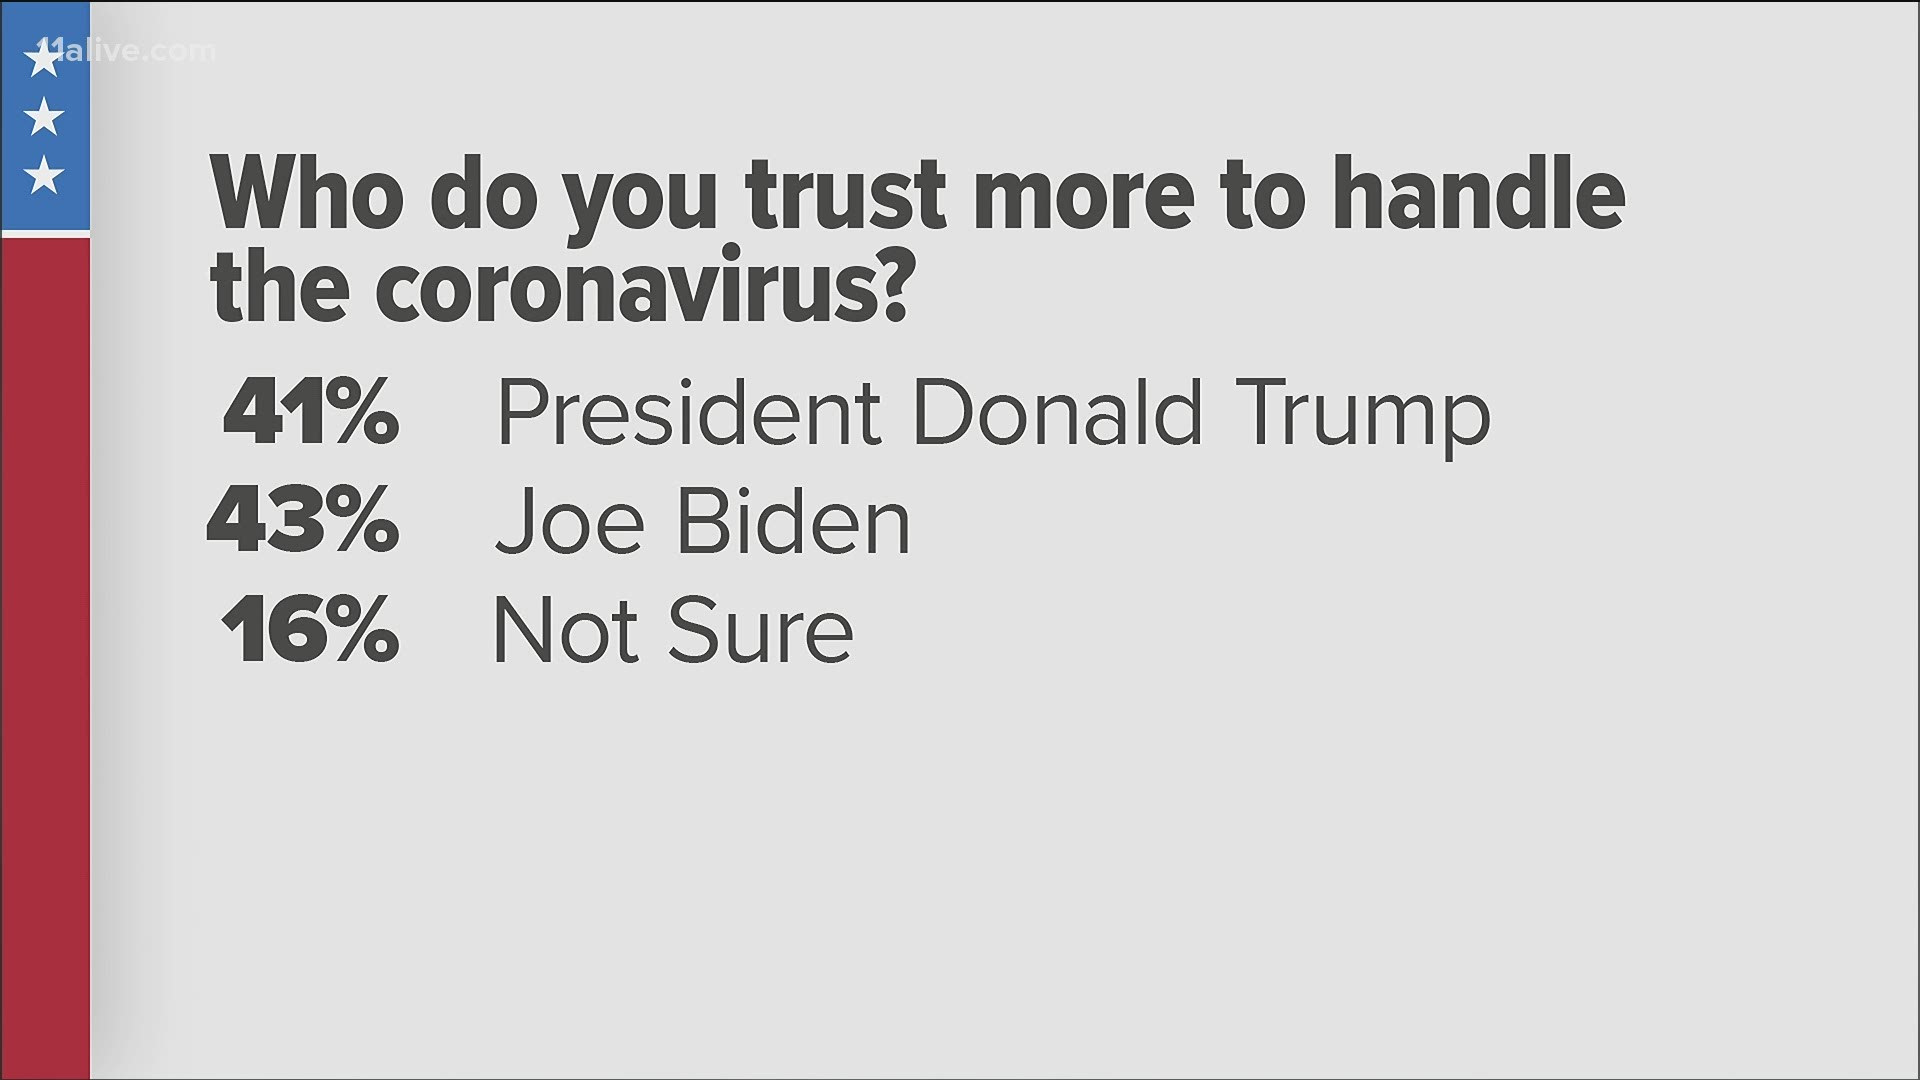 43 percent said Joe Biden.